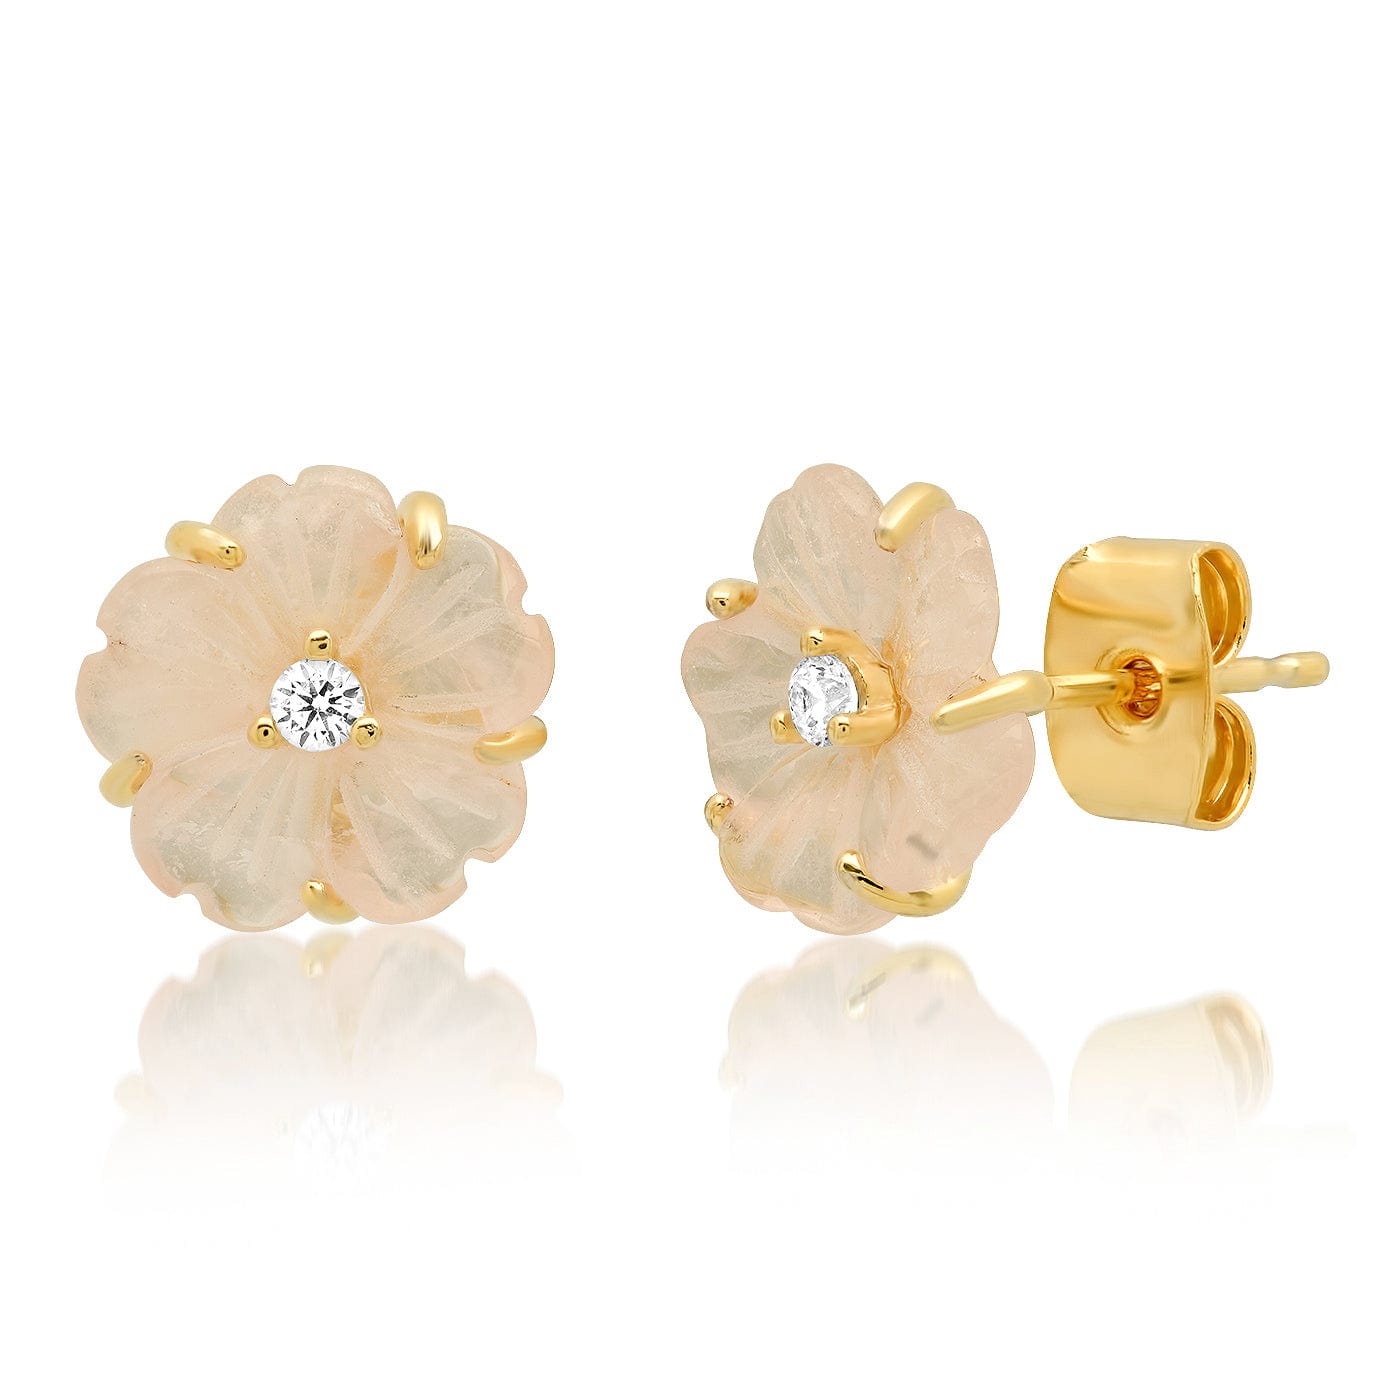 TAI JEWELRY Earrings Rose Quartz Carved Flower Earrings